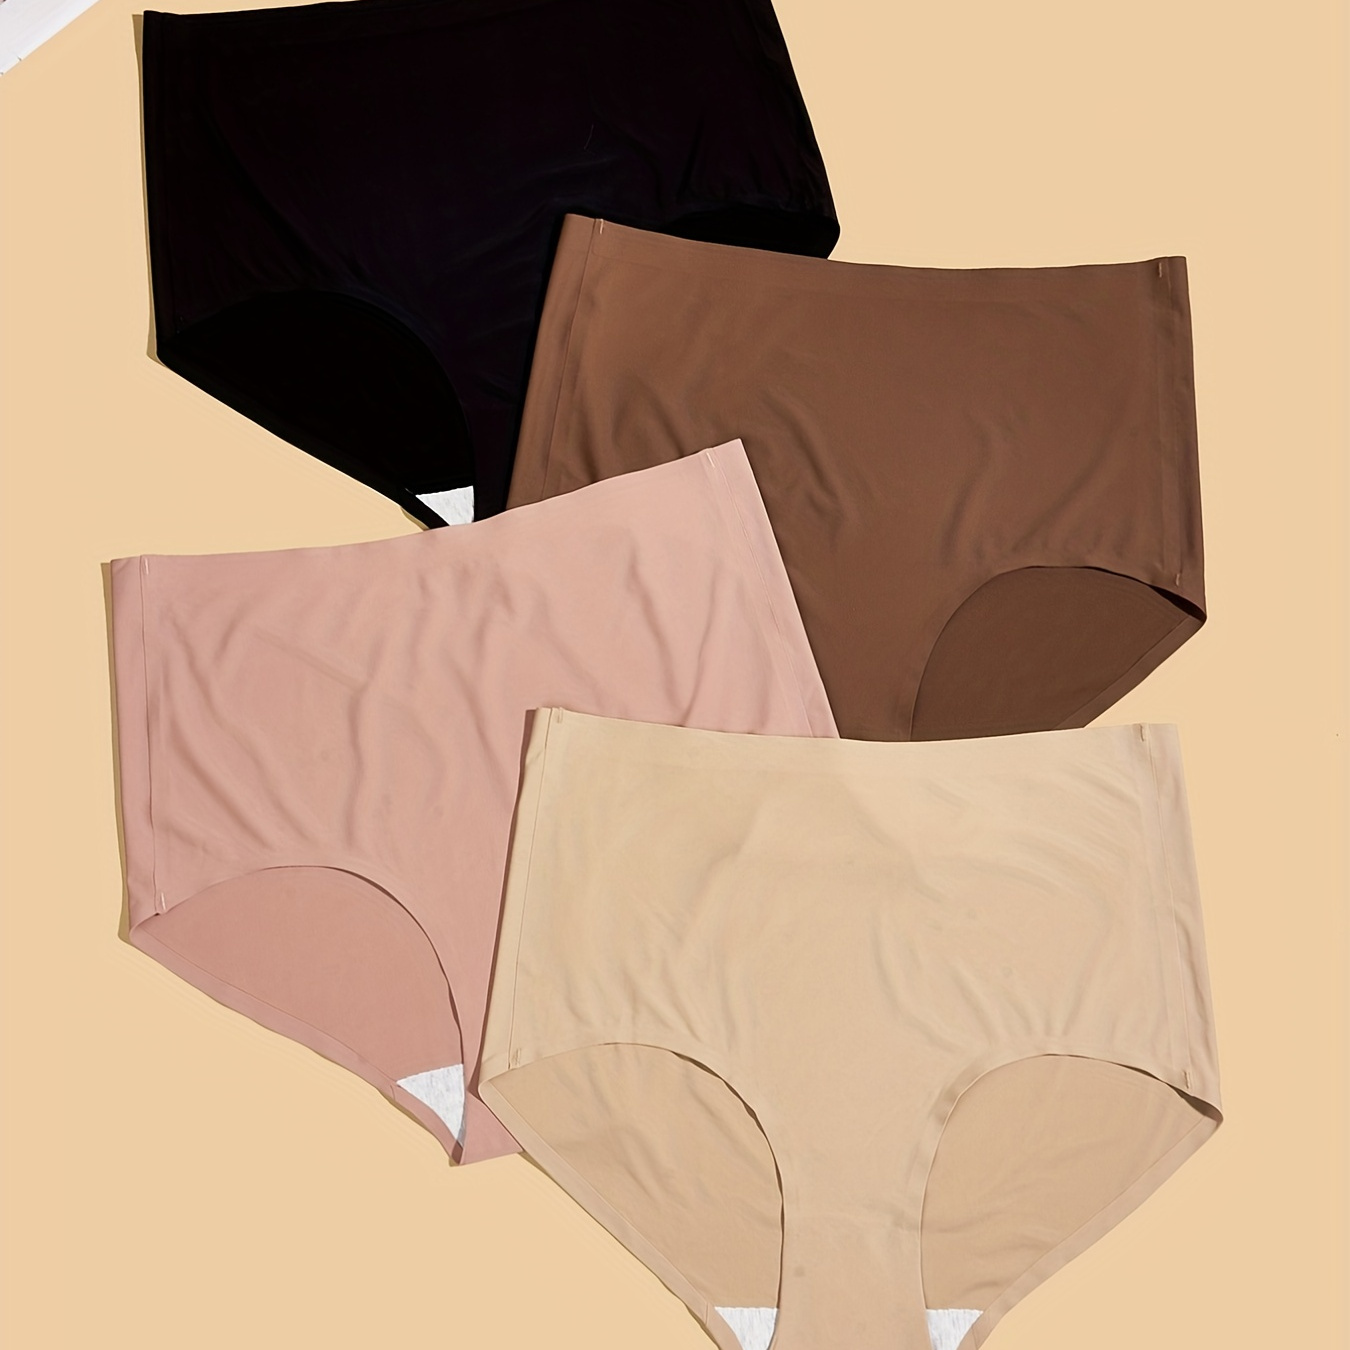 

4pcs Seamless Mixed Color Briefs, Breathable & Soft High Waist Panties, Women's Lingerie & Underwear